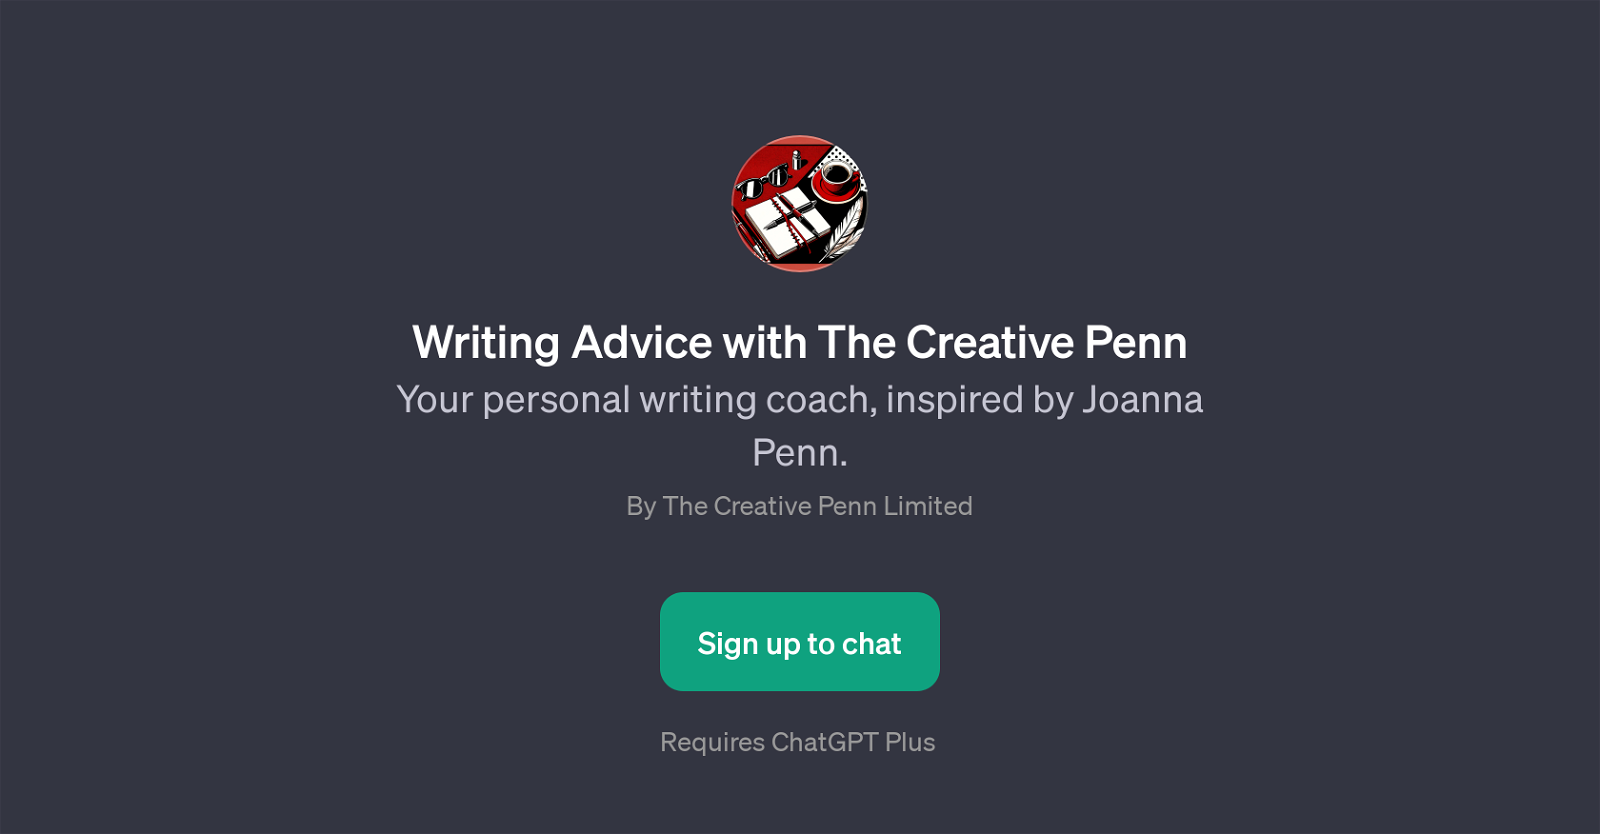 Writing Advice with The Creative Penn website